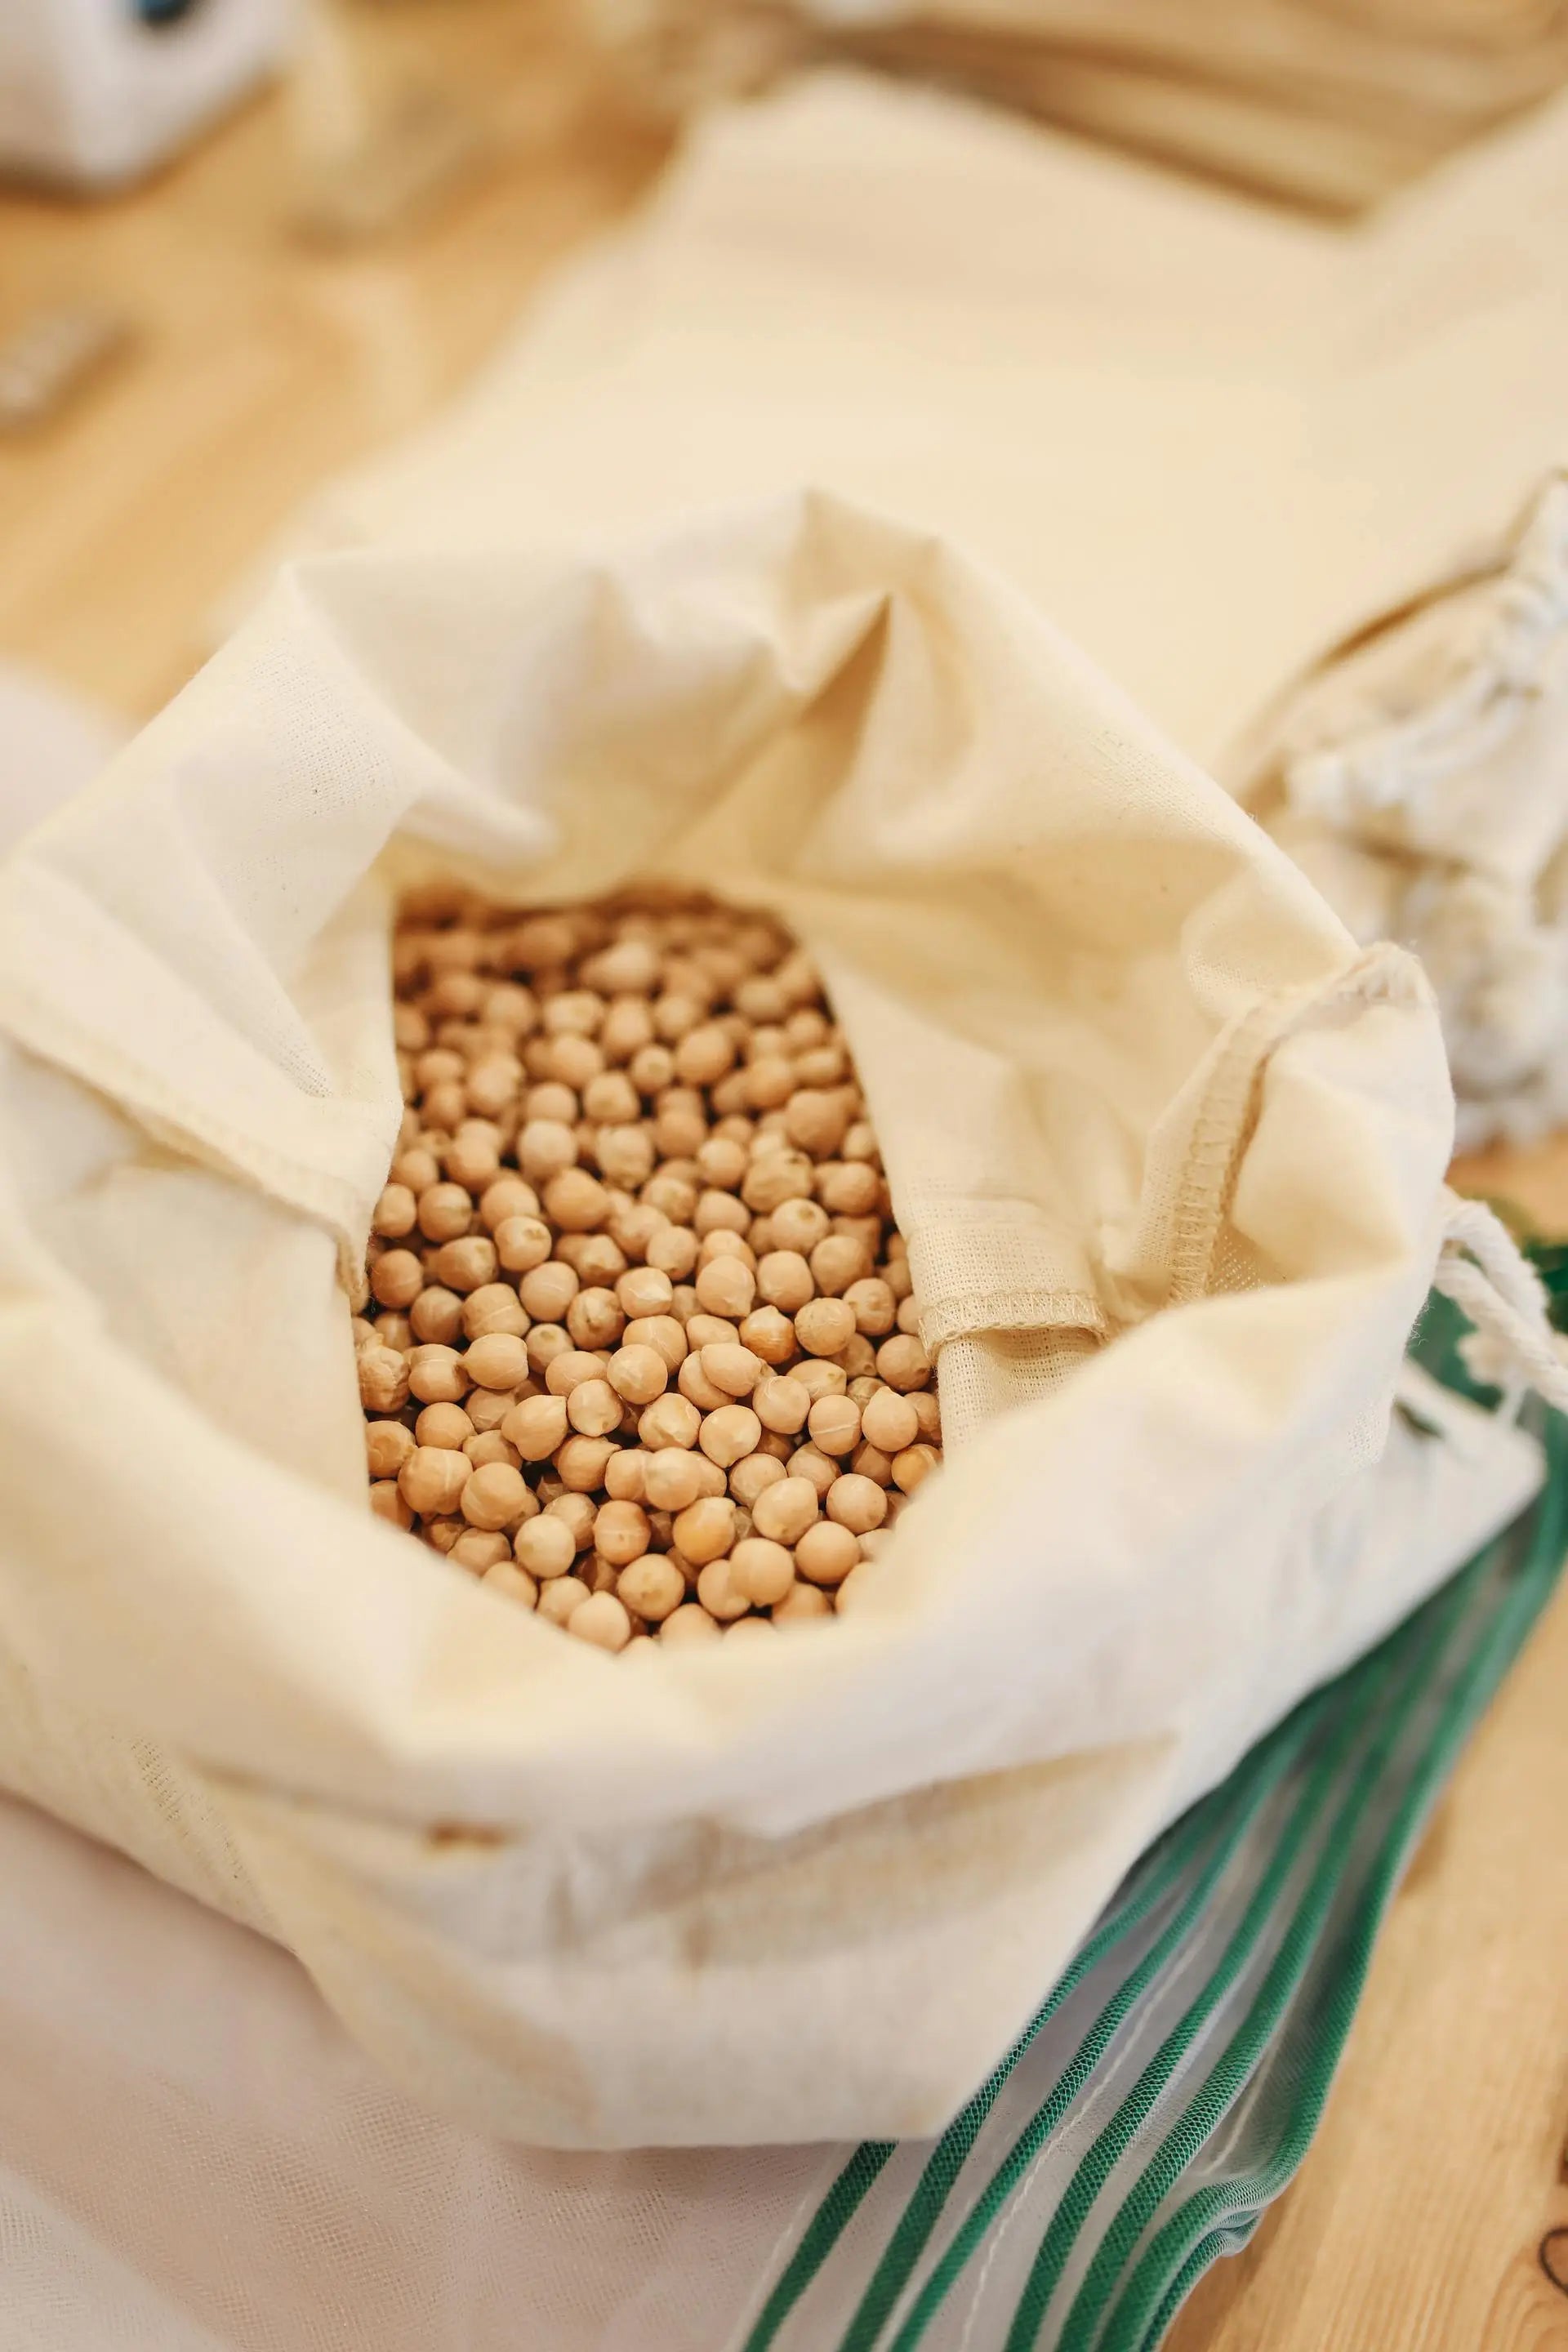 How-Long-Can-Soybeans-Last-In-The-Fridge | Fridge.com